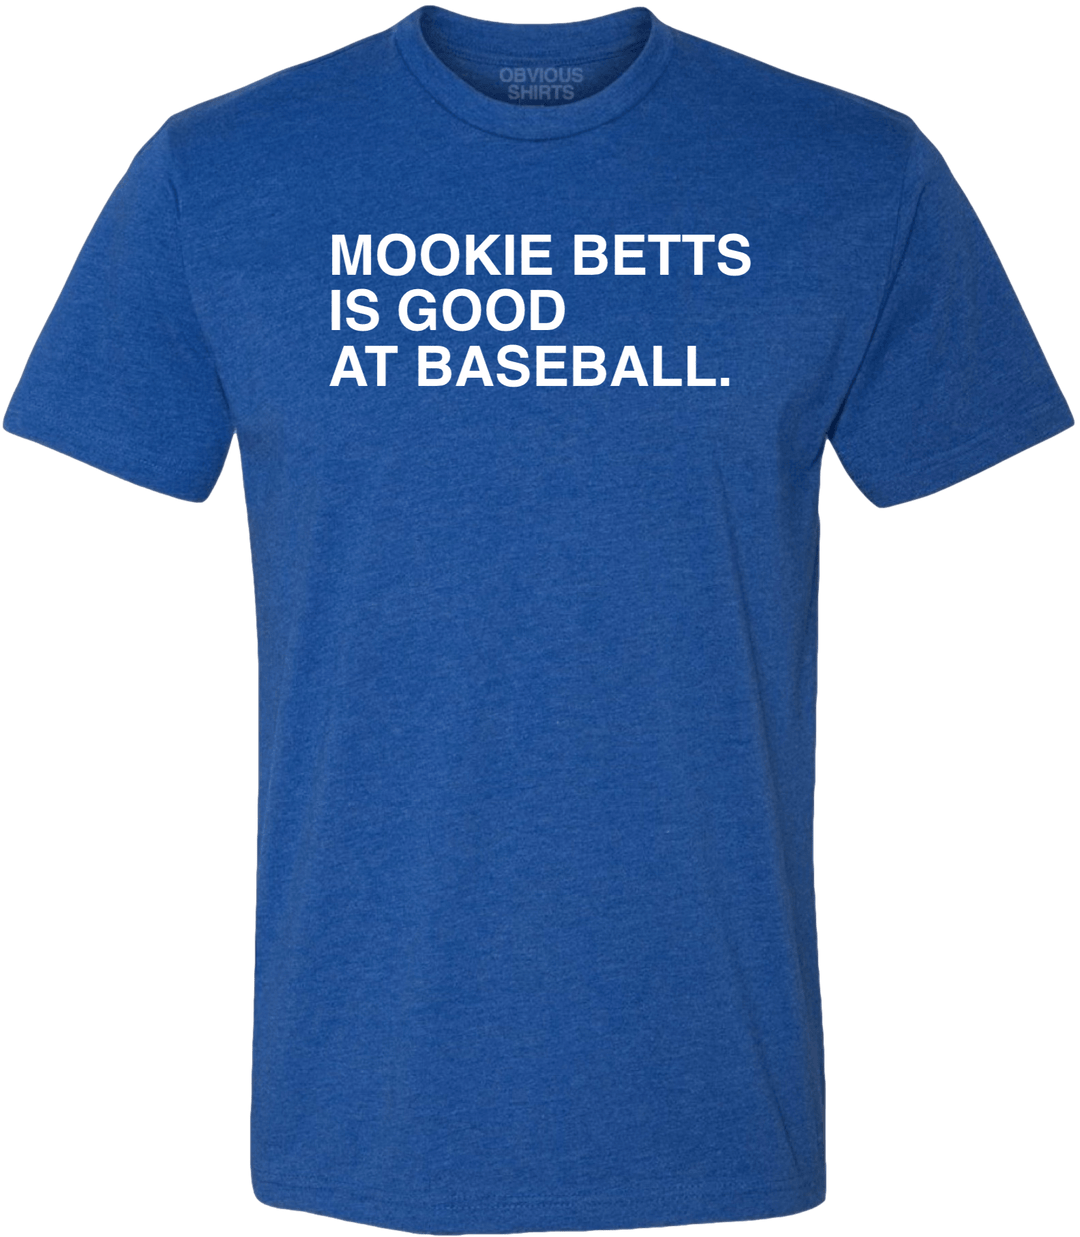 mookie betts youth shirt